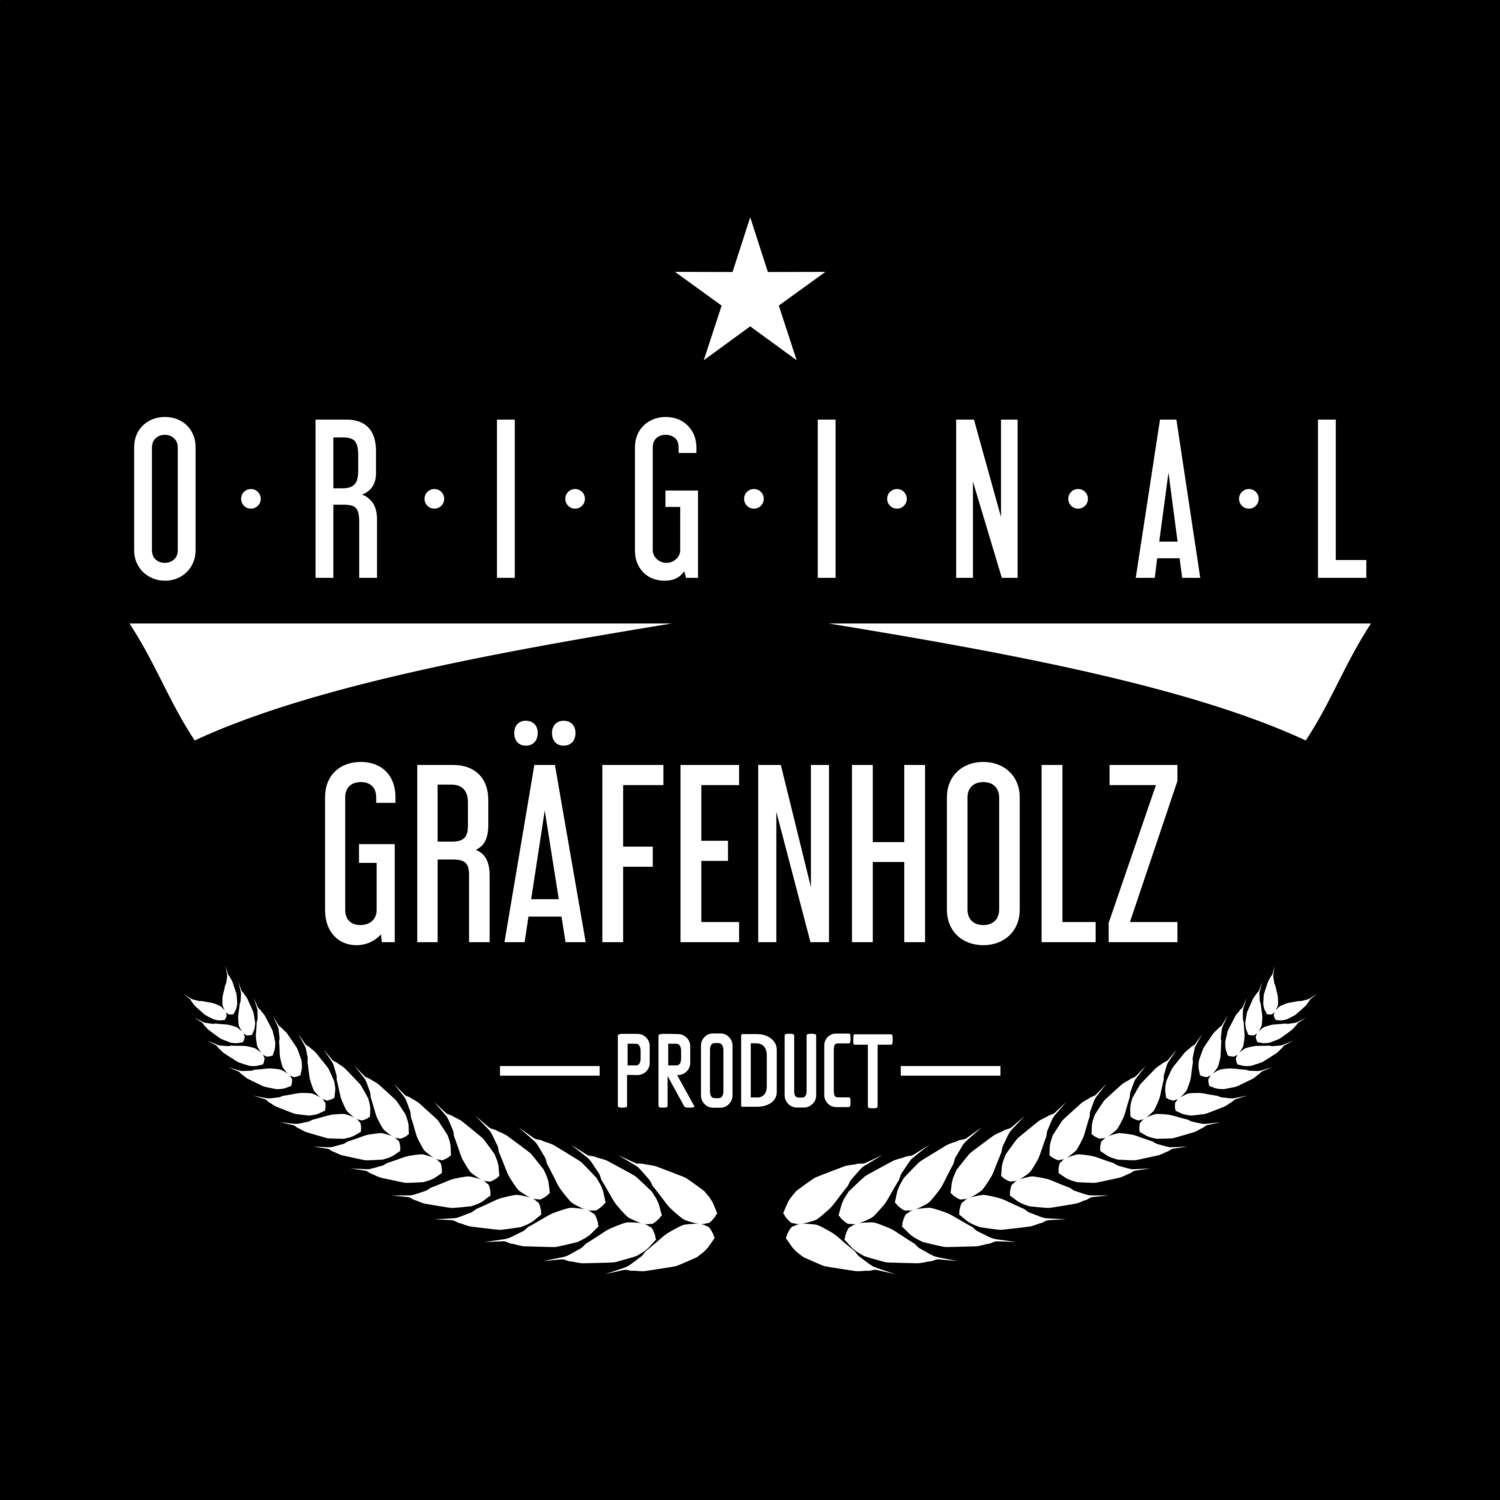 Gräfenholz T-Shirt »Original Product«